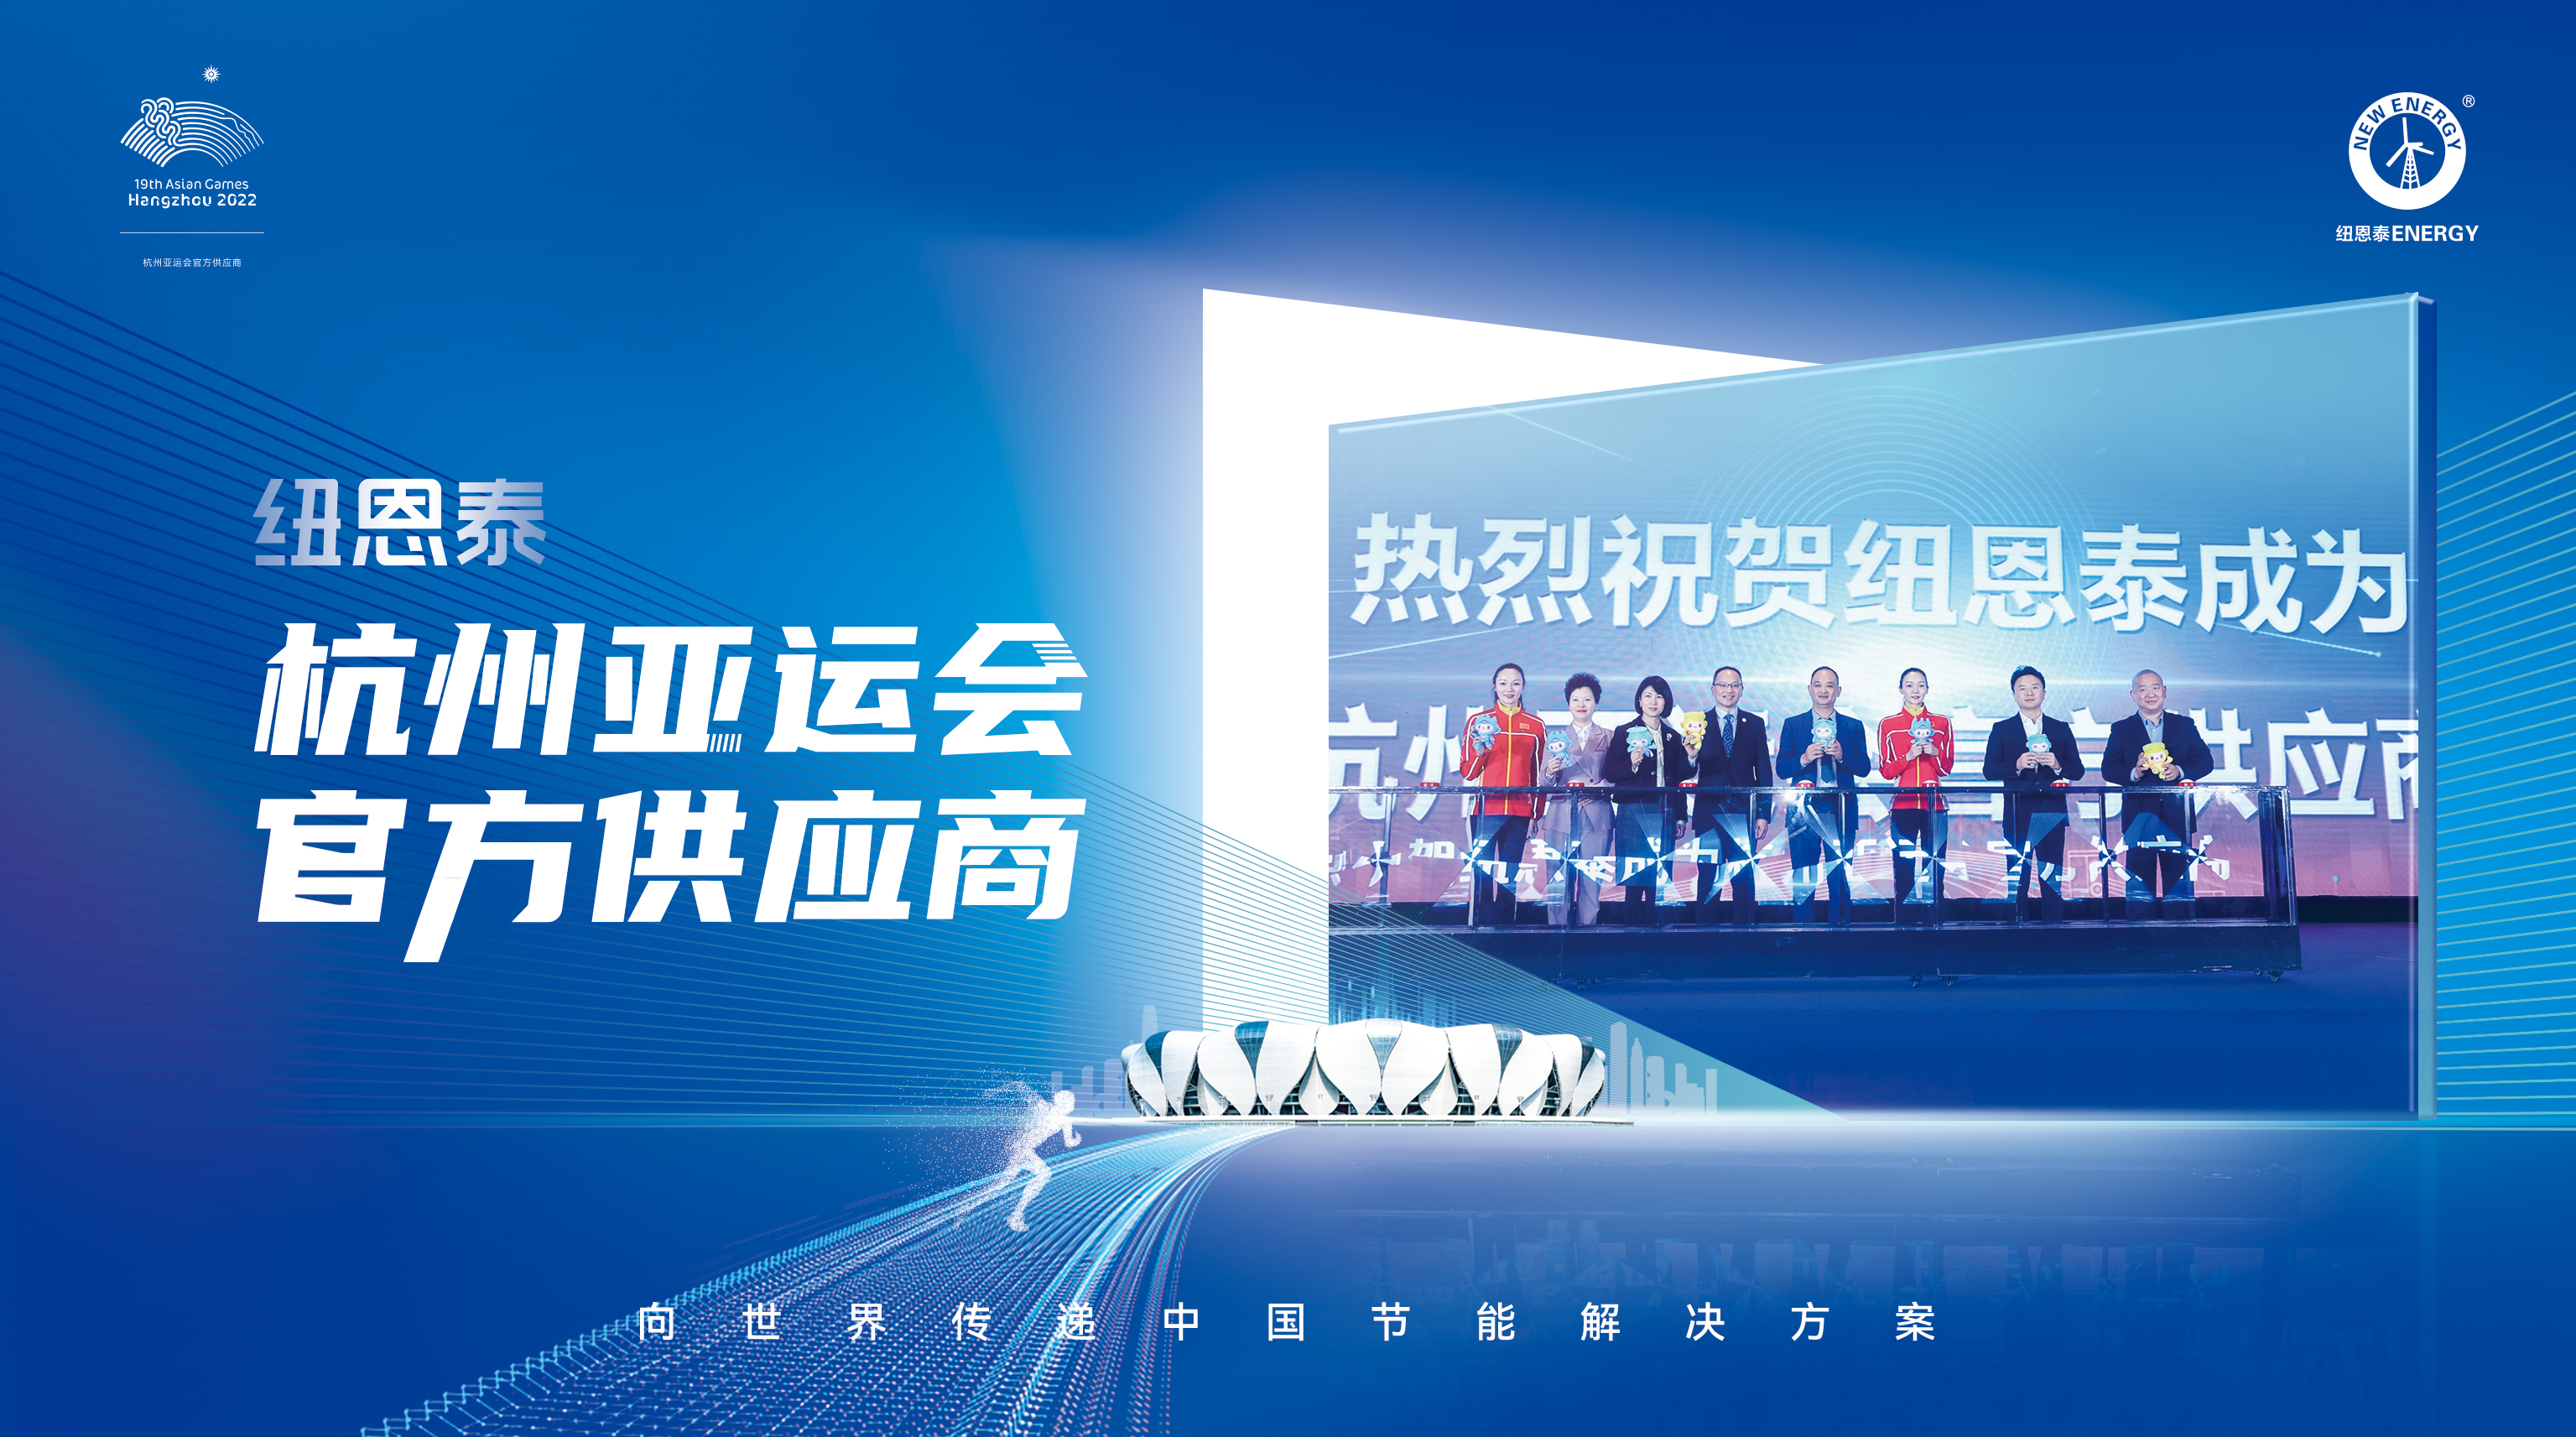 【jxf吉祥坊】杭州亚运会官方供应商jxf吉祥坊：为杭州亚运会成功举办提供空气能绿色能源解决方案